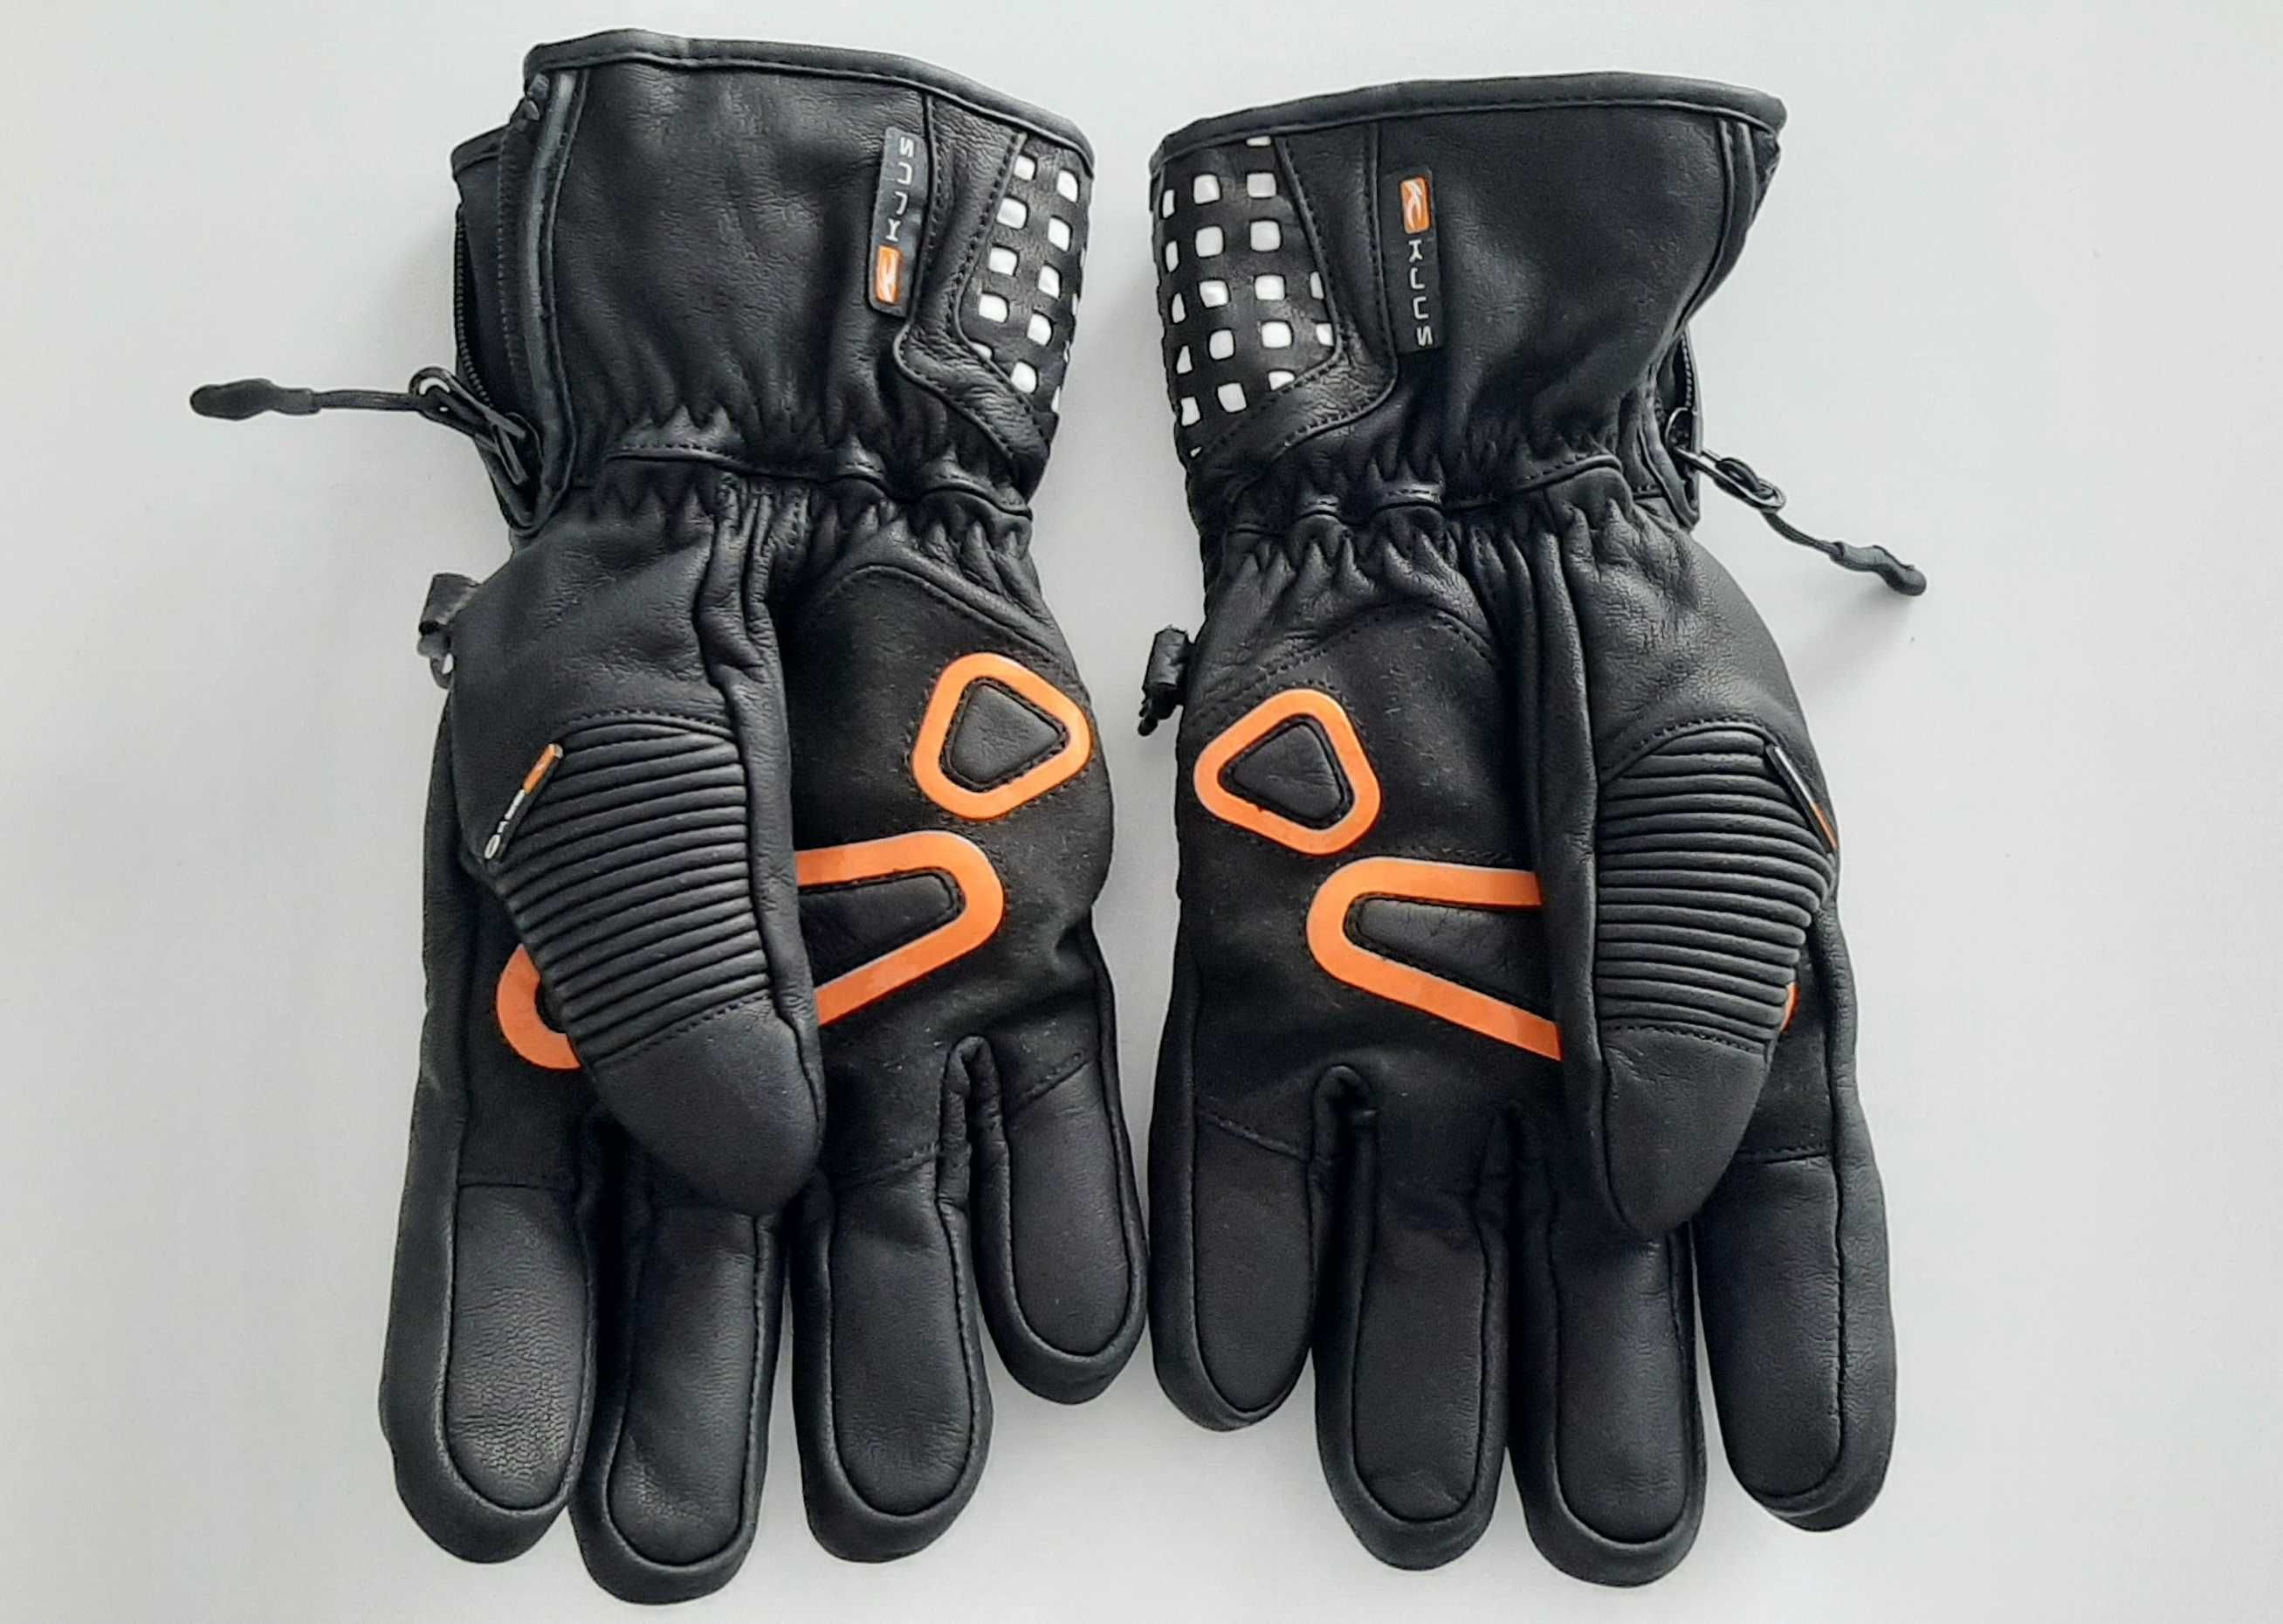 Rękawice narciarskie Kjus 100% leather-skóra naturalna L/9 KDry czarne